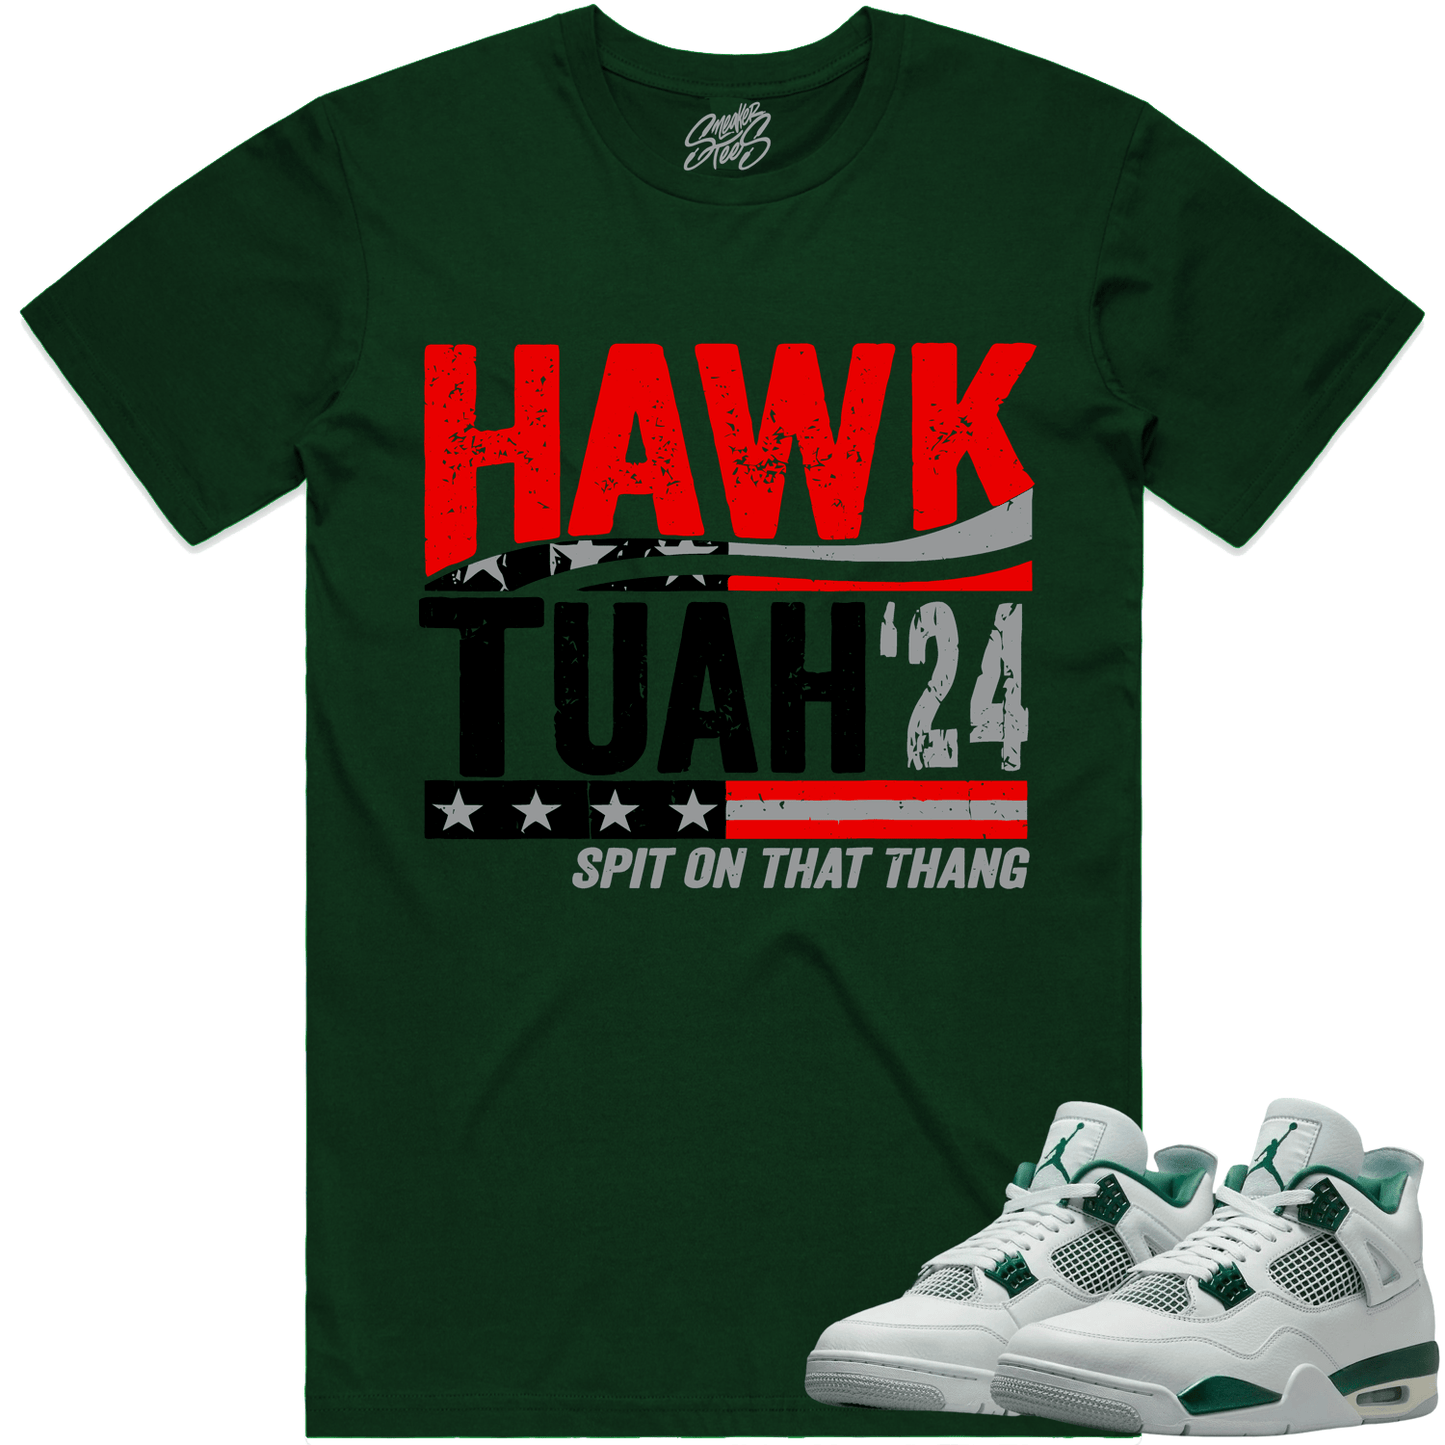 Oxidized Green 4s Shirt - Jordan 4 Oxidized Sneaker Tees - Hawk